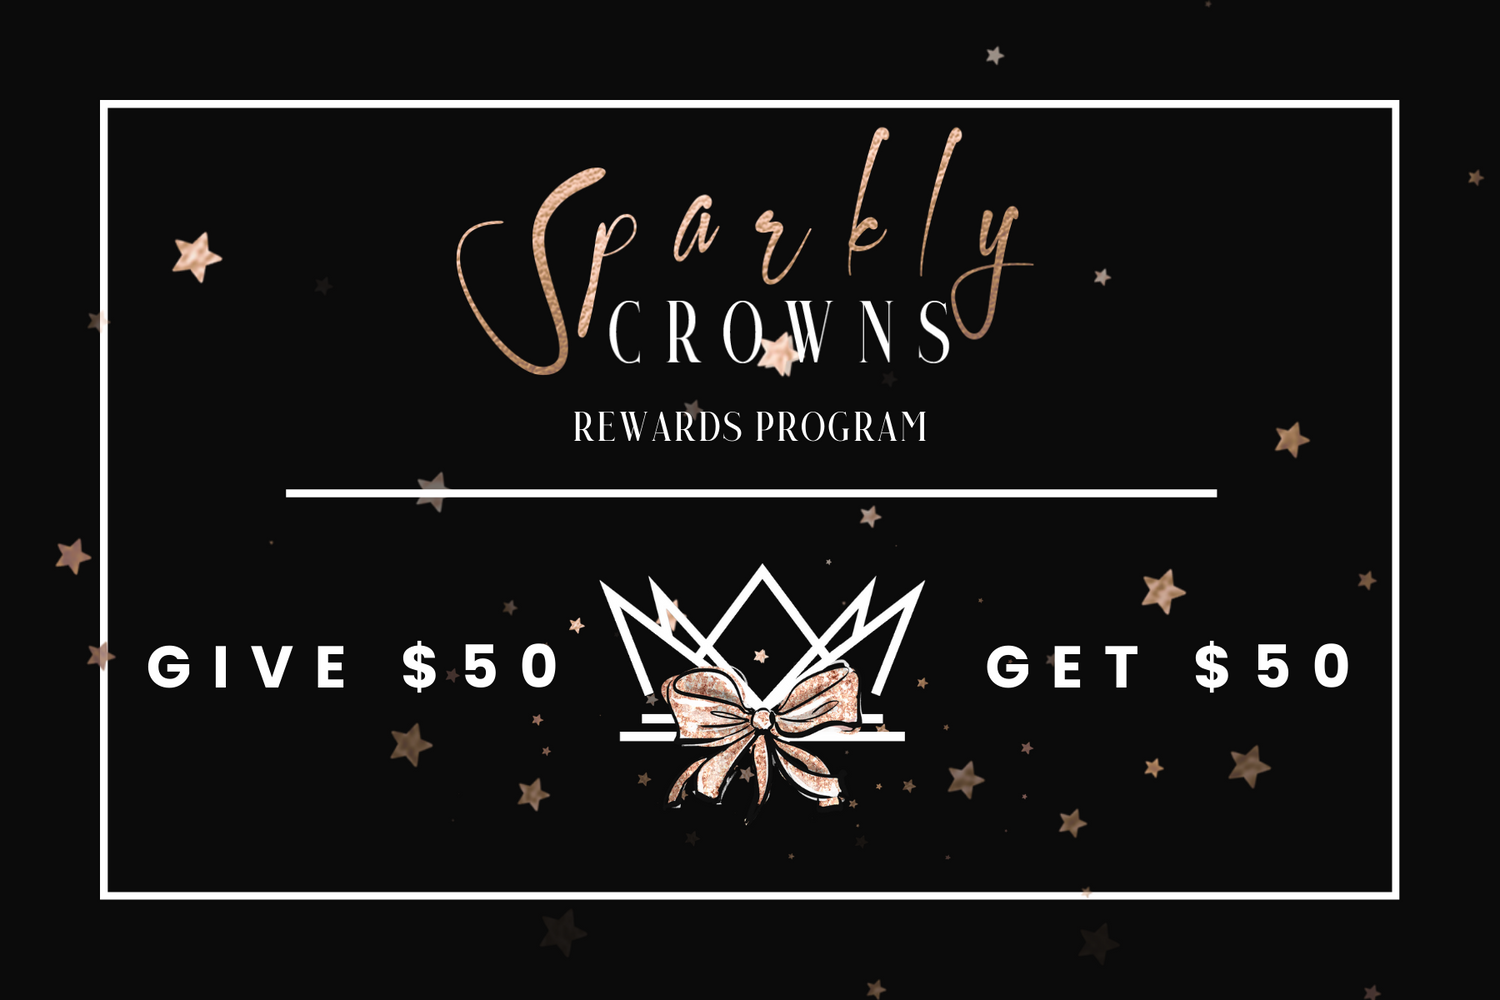 Sparkly Crown Rewards Program by Miele Moda Luxury Fashion